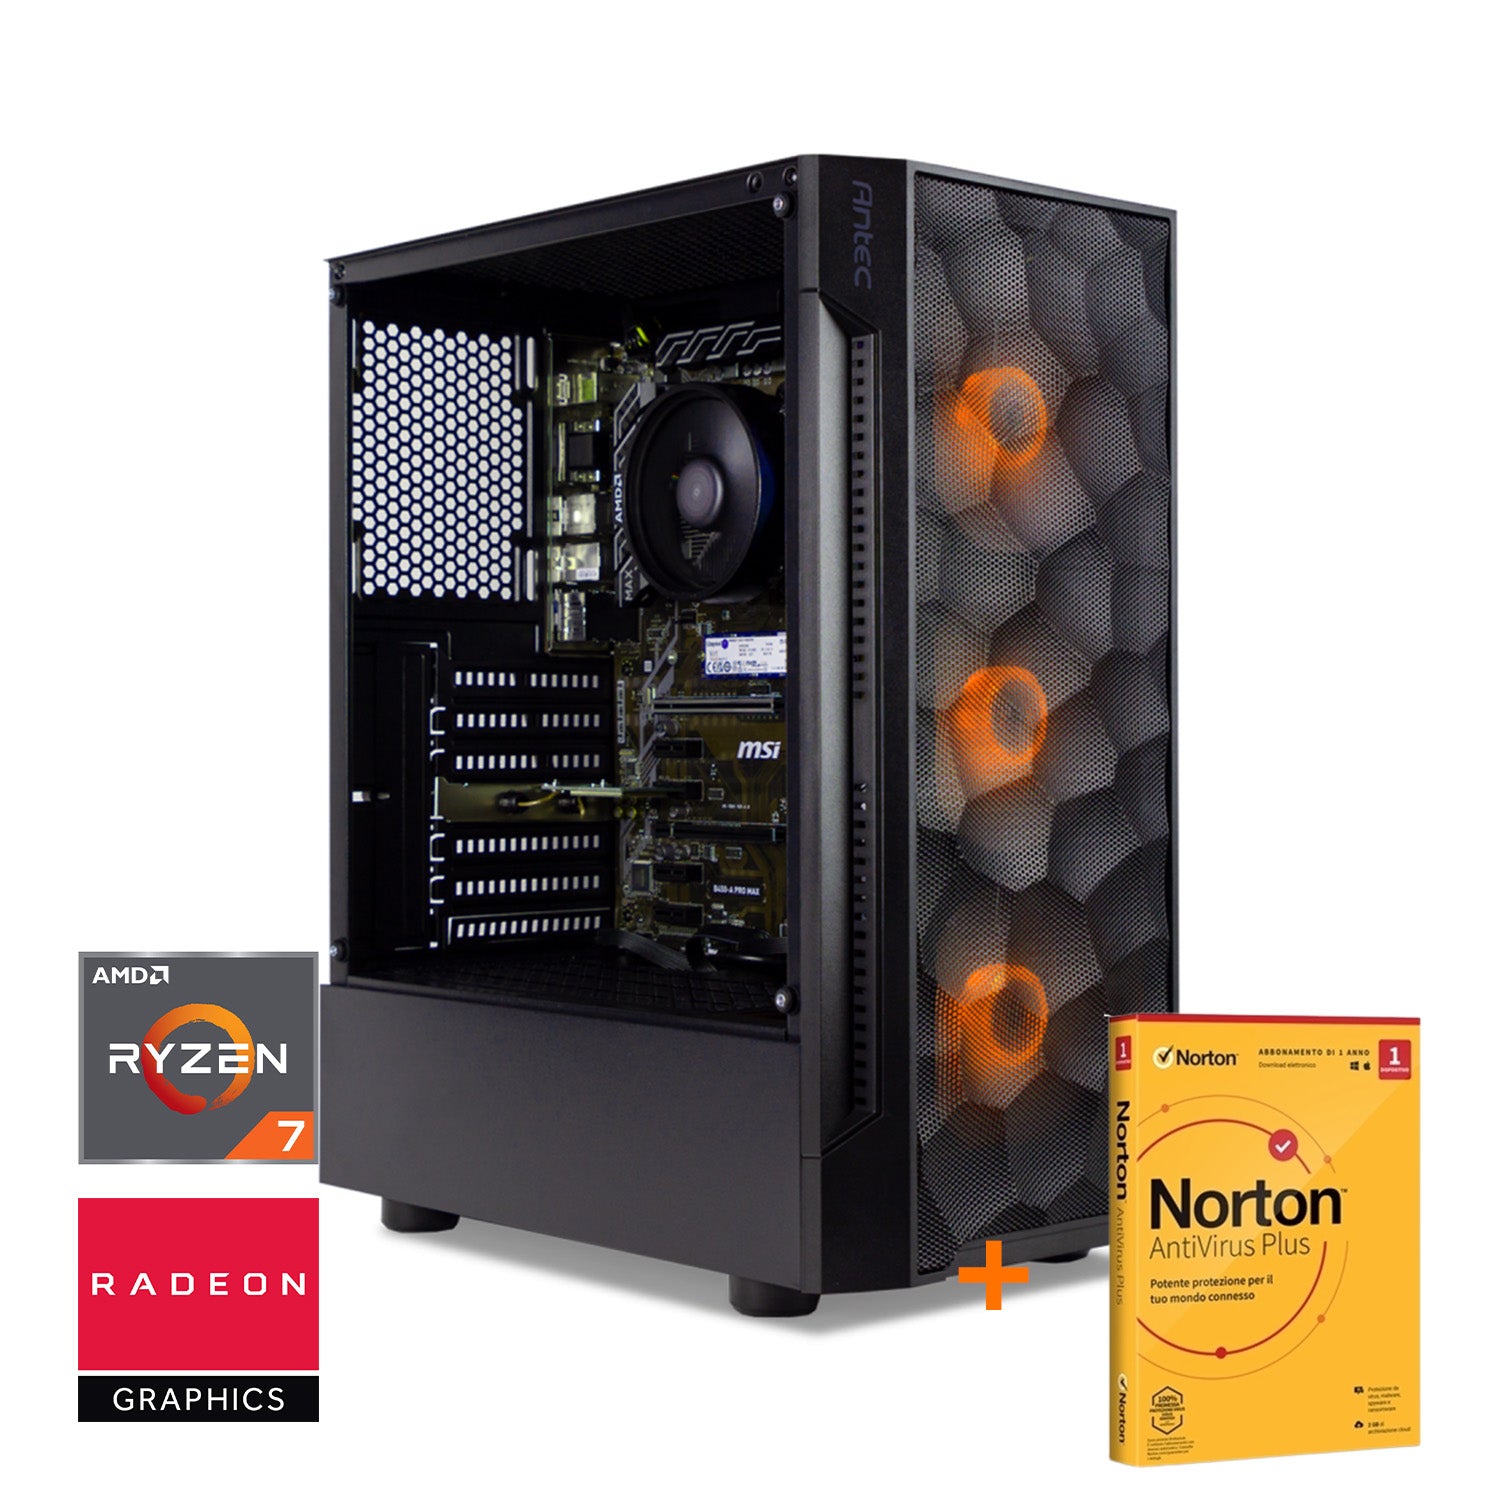 OVERCLOCK Rapid Office 5 + Norton Antivirus 1 Jahr – AMD Ryzen 5 5600g, 16 GB DDR4 3200 MHz, 512 GB, APU Radeon Graphics 7, Win 11 Pro